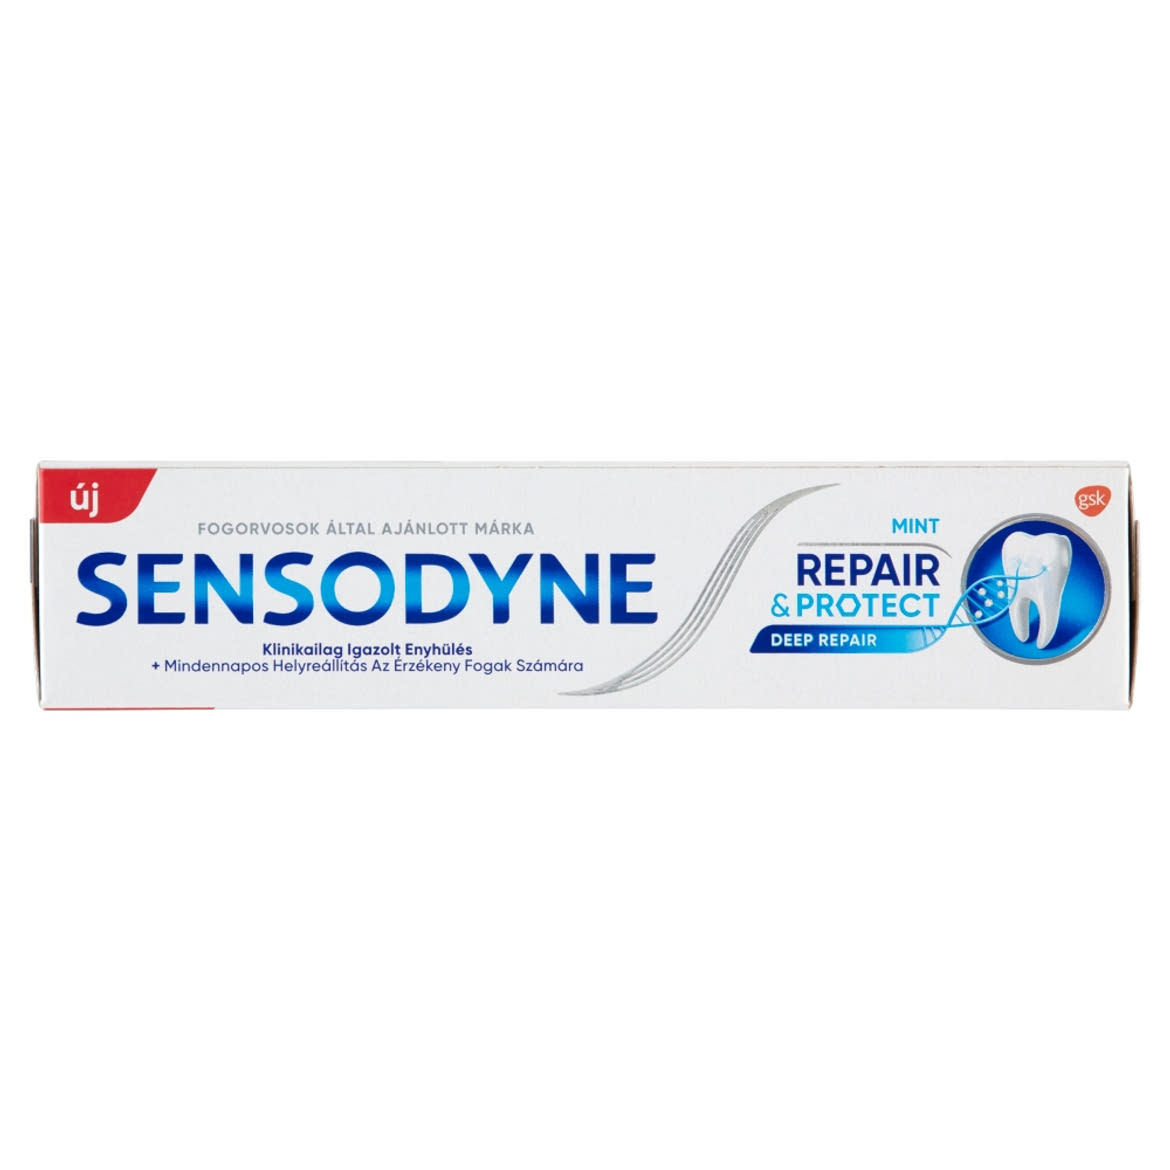 Sensodyne Repair & Protect Mint fogkrém